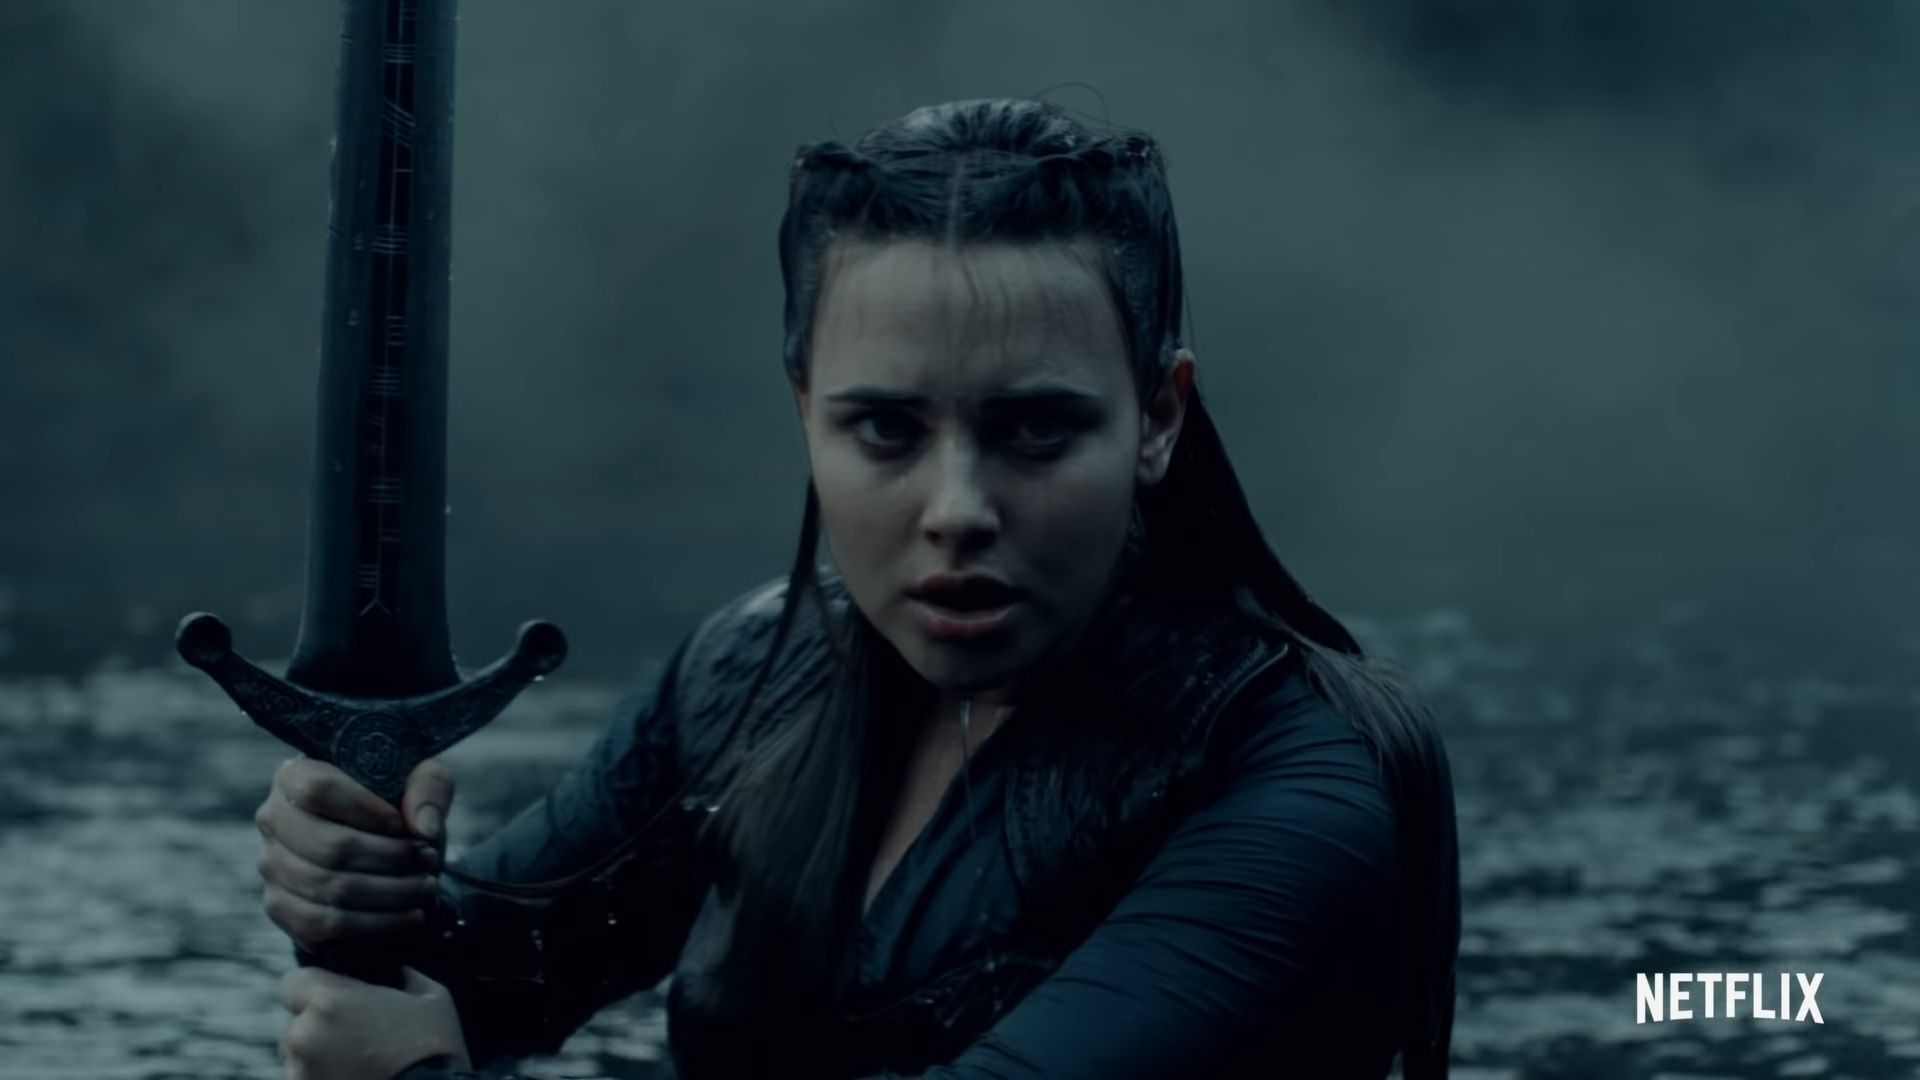 Katherine Langford Picks Up A Sword In Netflix's 'Cursed'